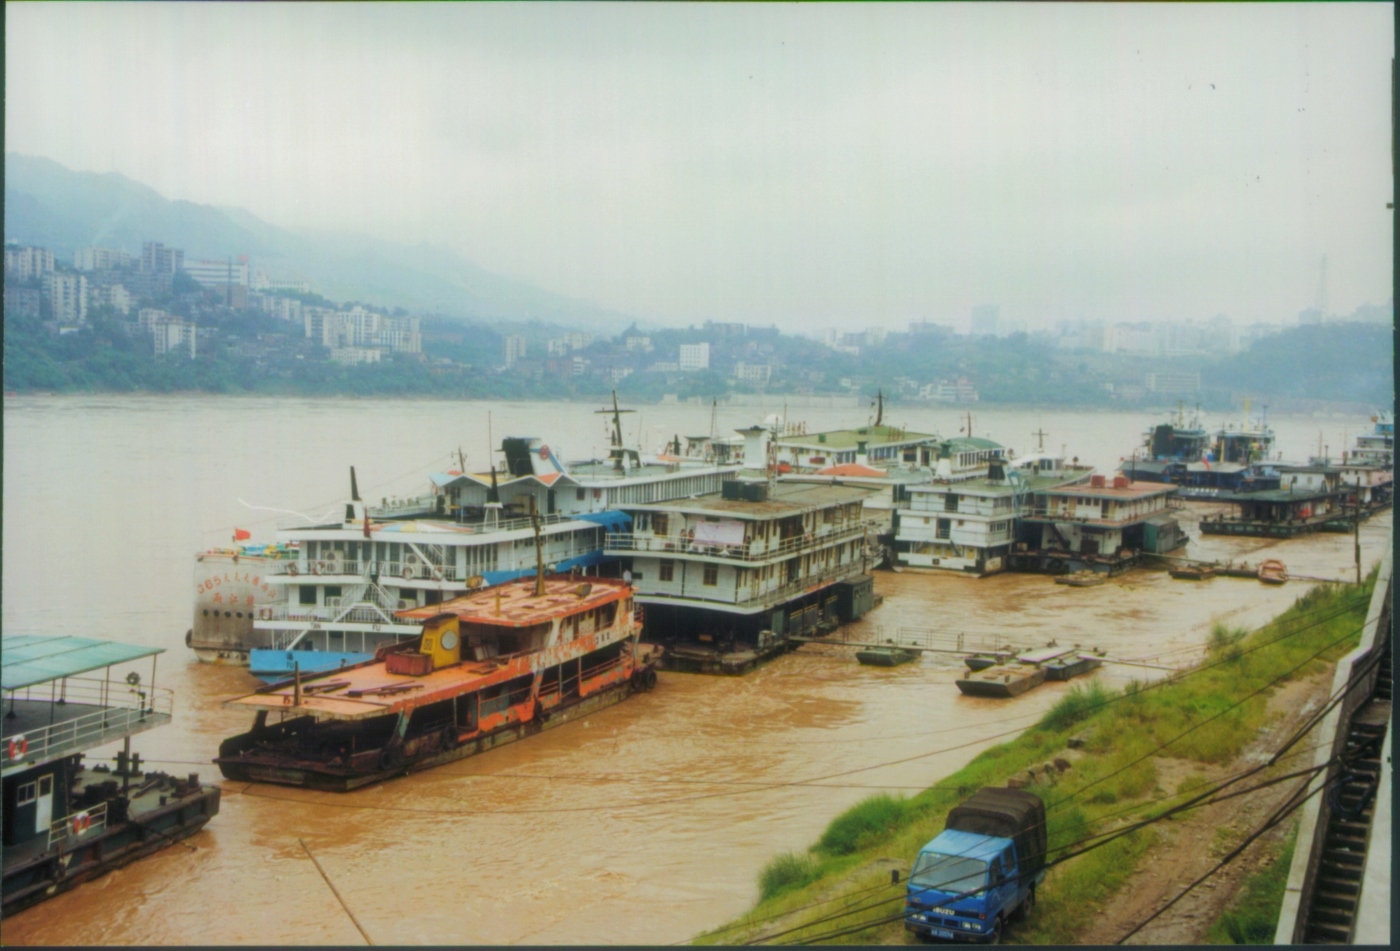 ferries in chongqing on yangtze river china in 1999